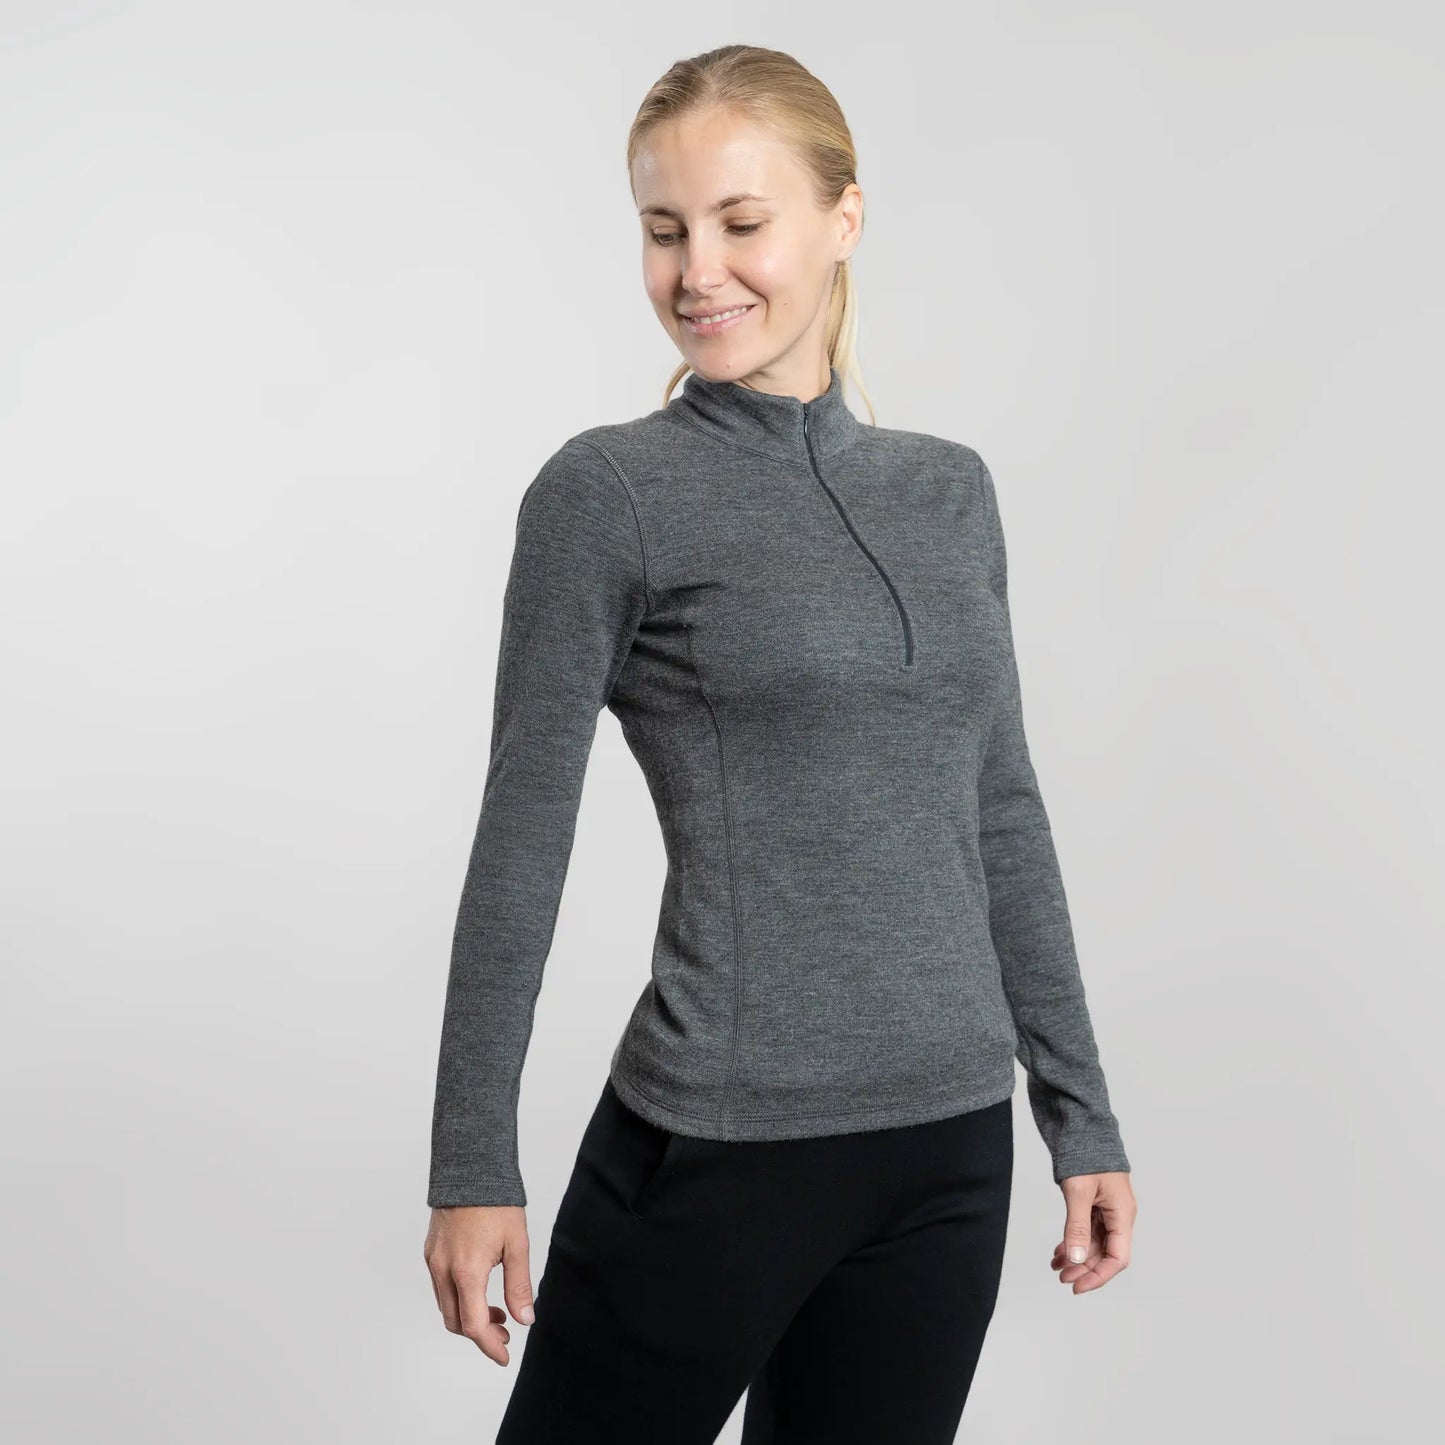 Women's Alpaca Wool Half-Zip Base Layer: Lightweight | Arms of Andes